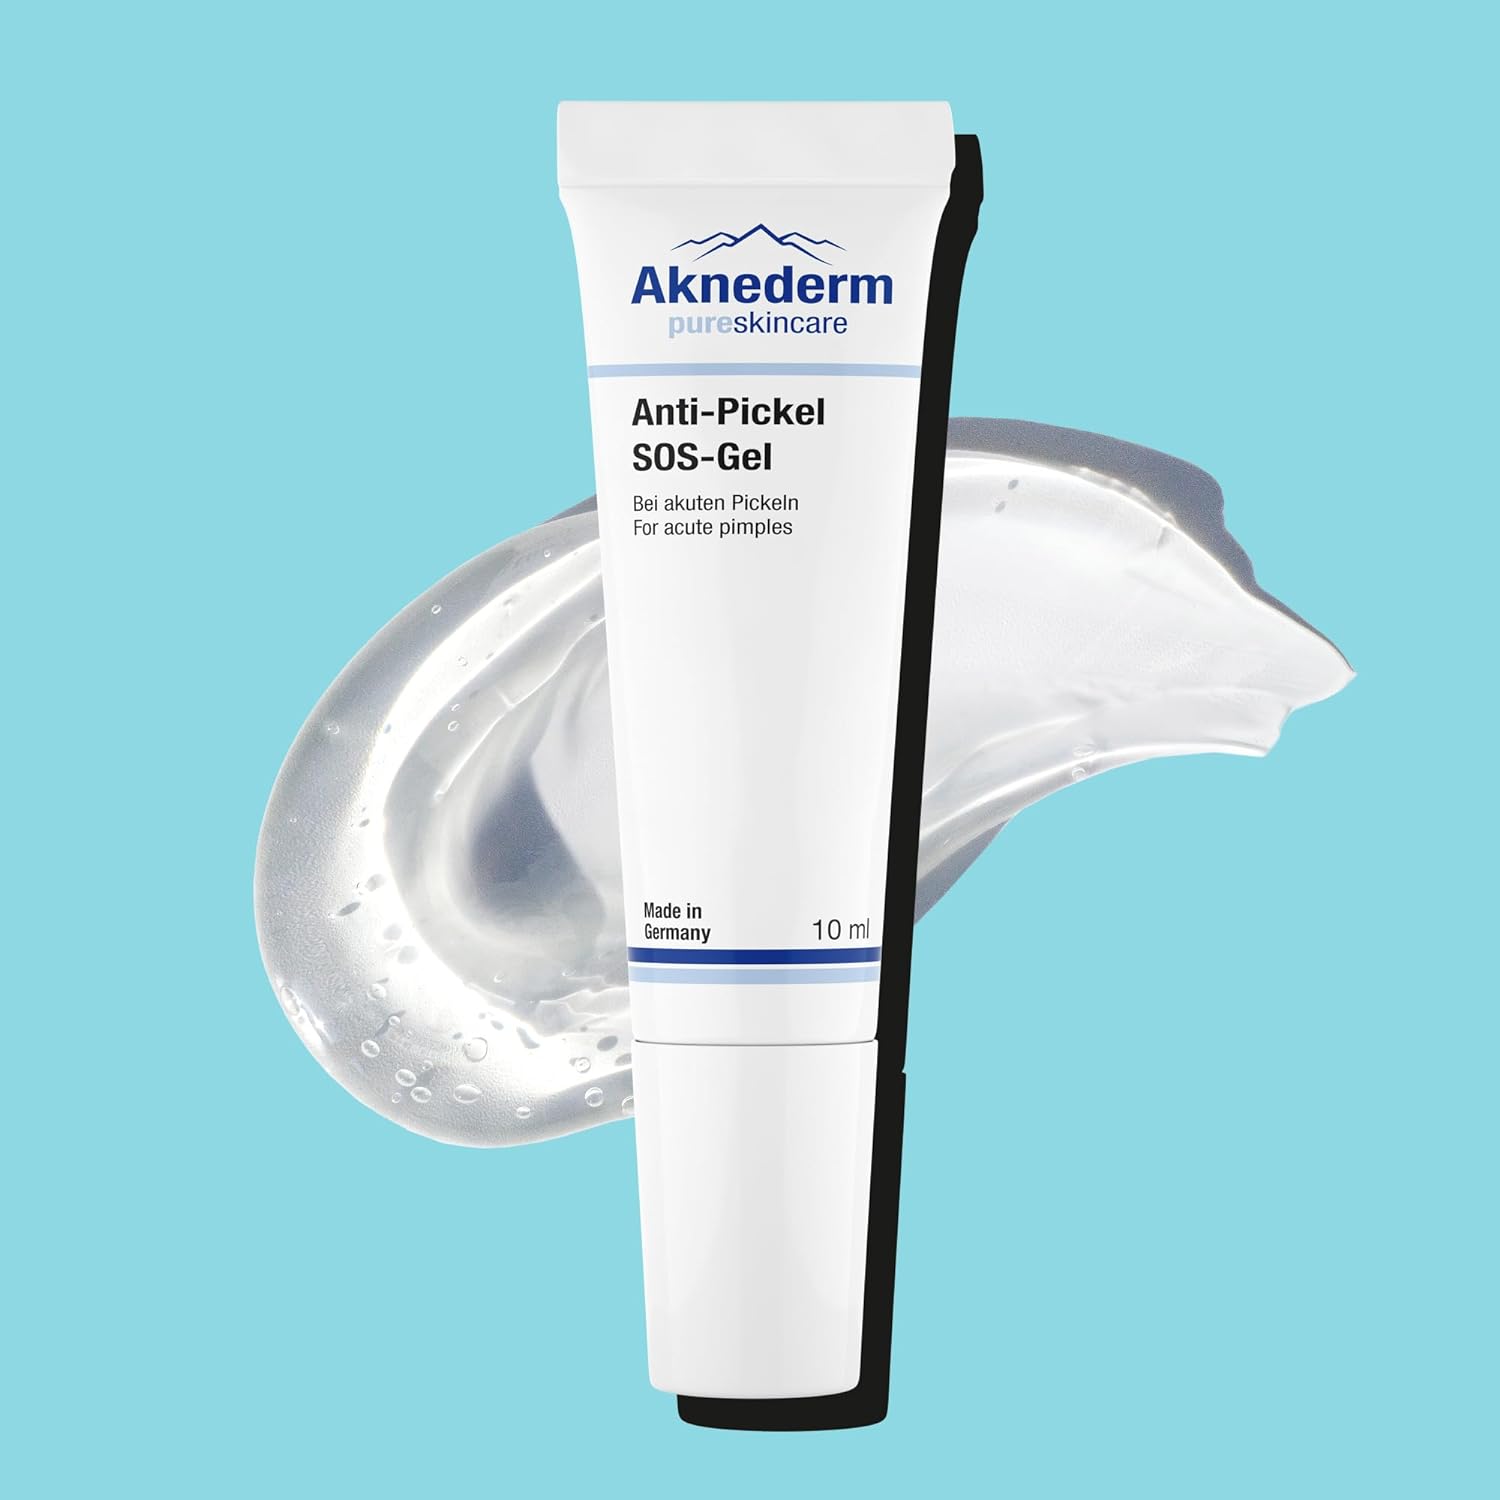 Acnederm Anti-Pimple Gel 10 ml I Anti-Pimple Gel with Salicylic Acid & Oil Slate Oil I Spot Treatment for Acne Prone Skin I Fragrance-Free Pimple Gel